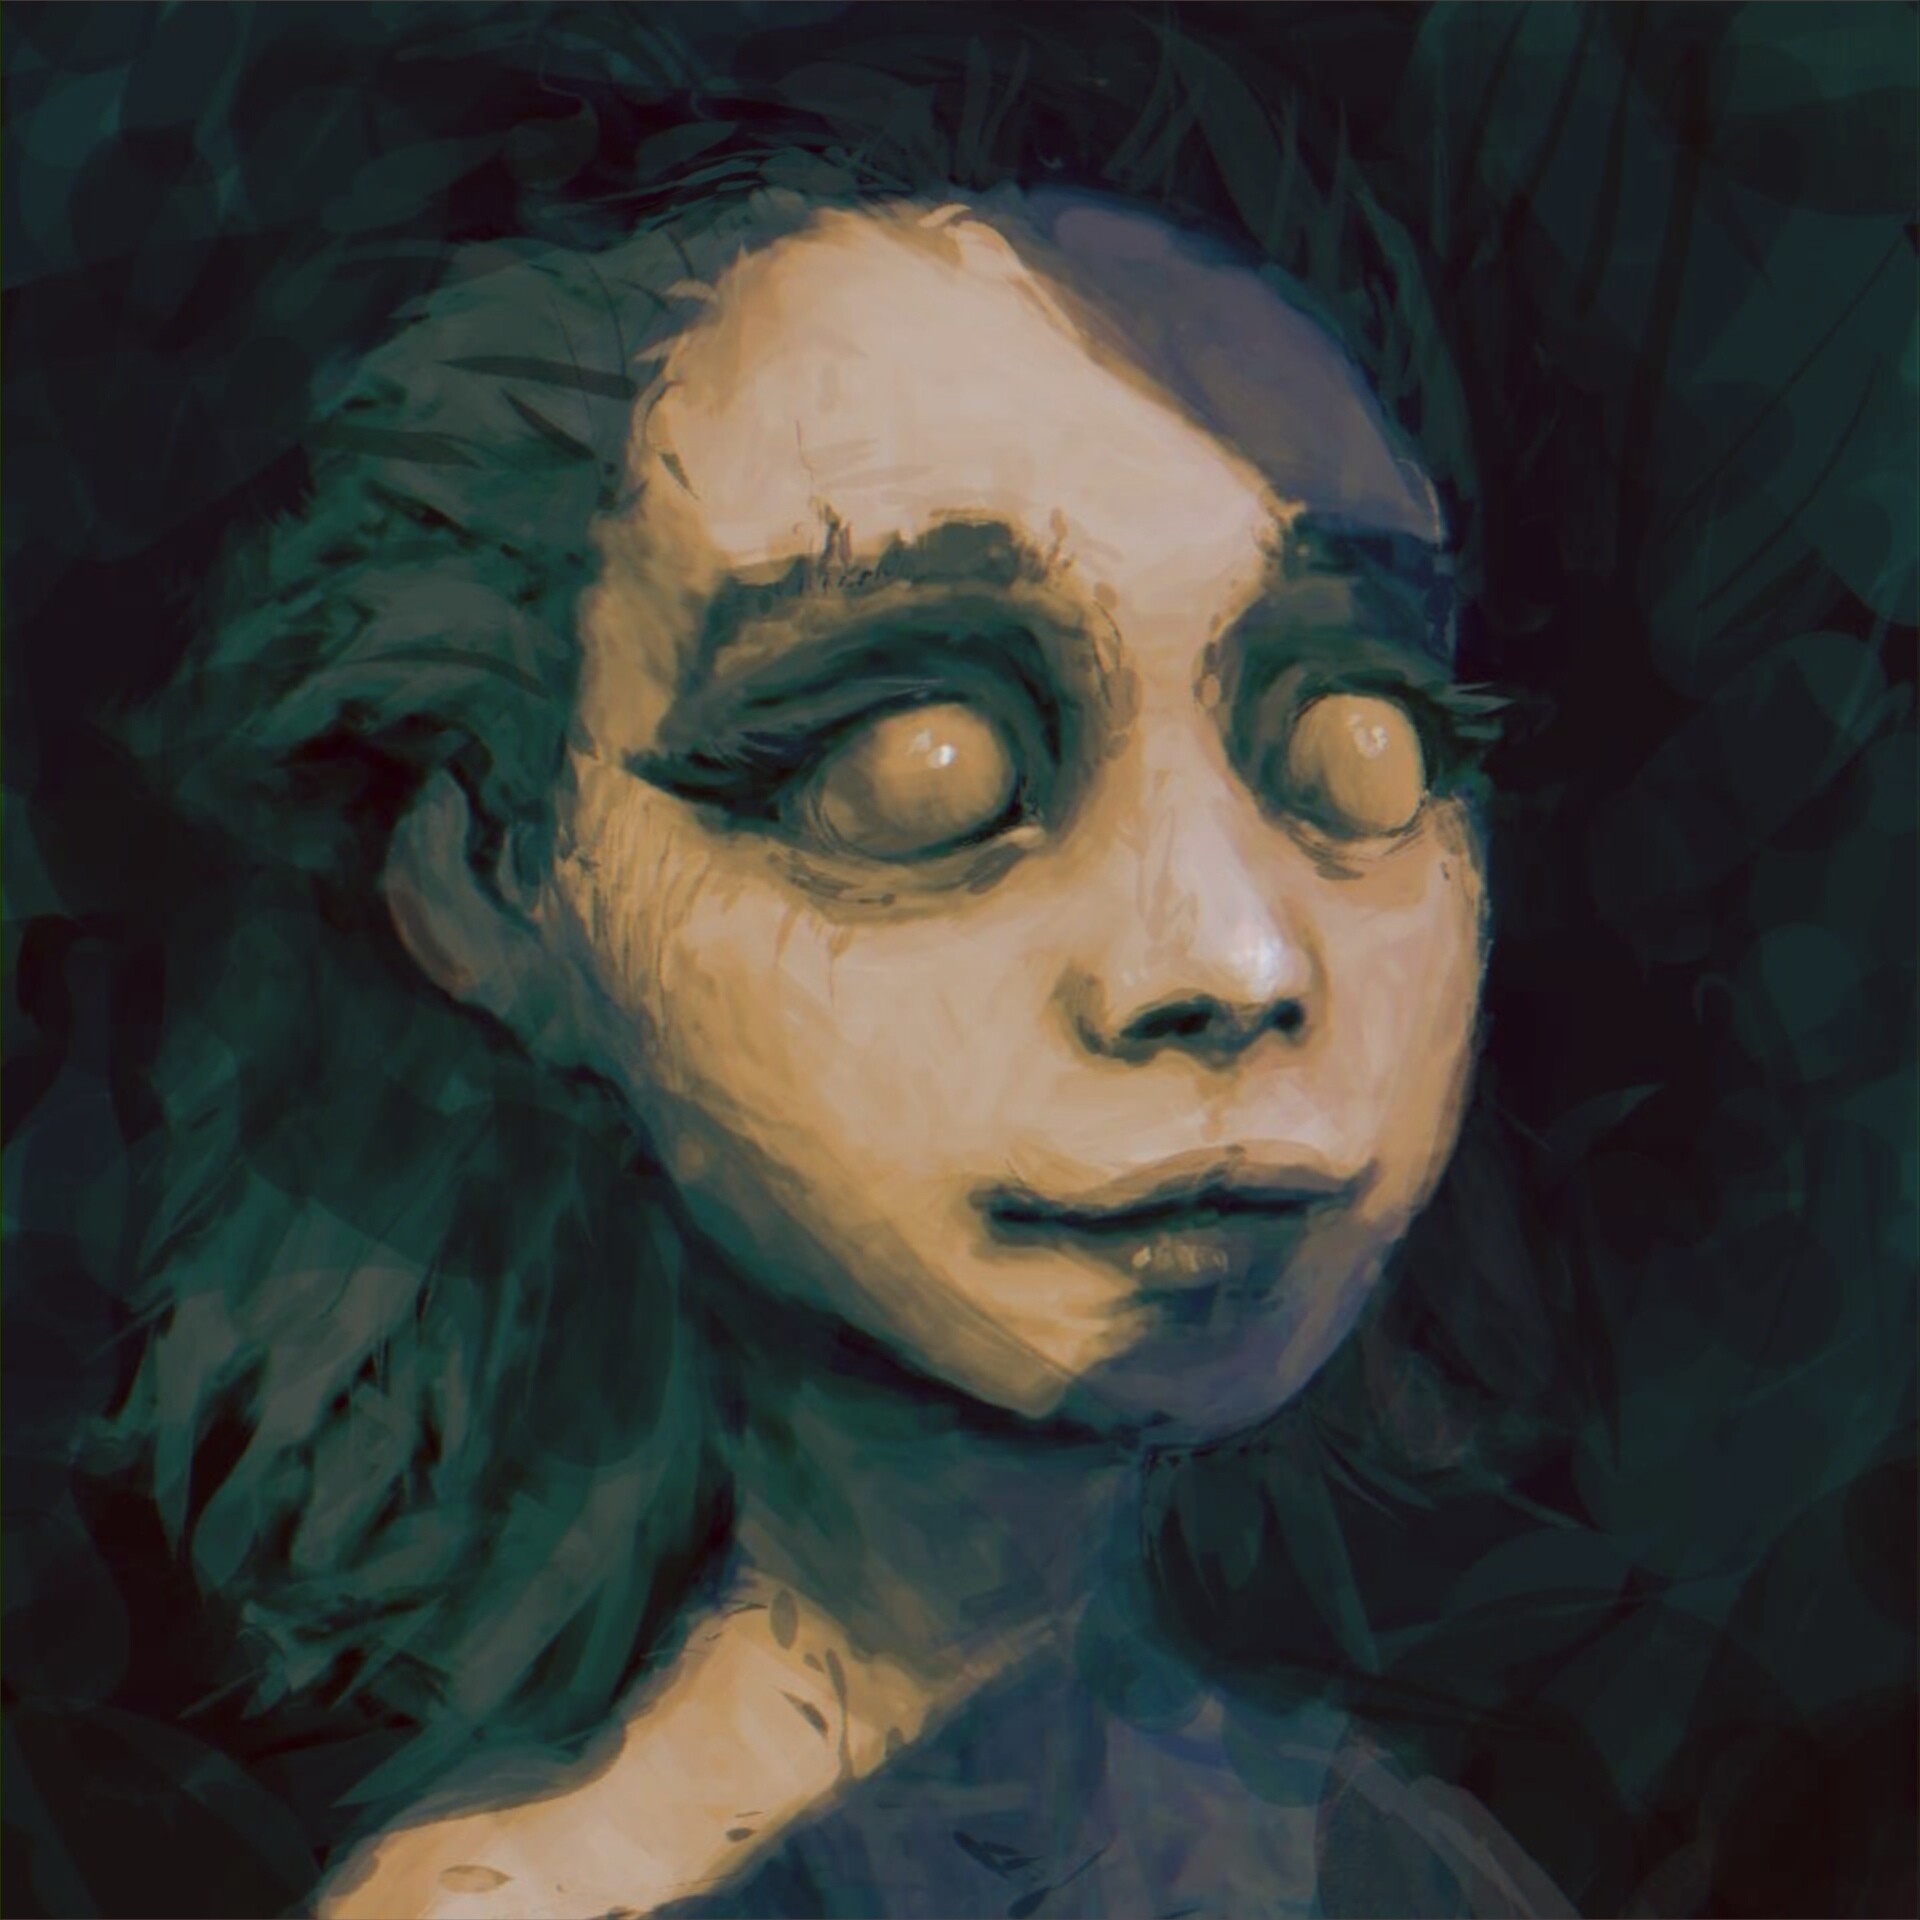 ArtStation - Zombie portrait #3